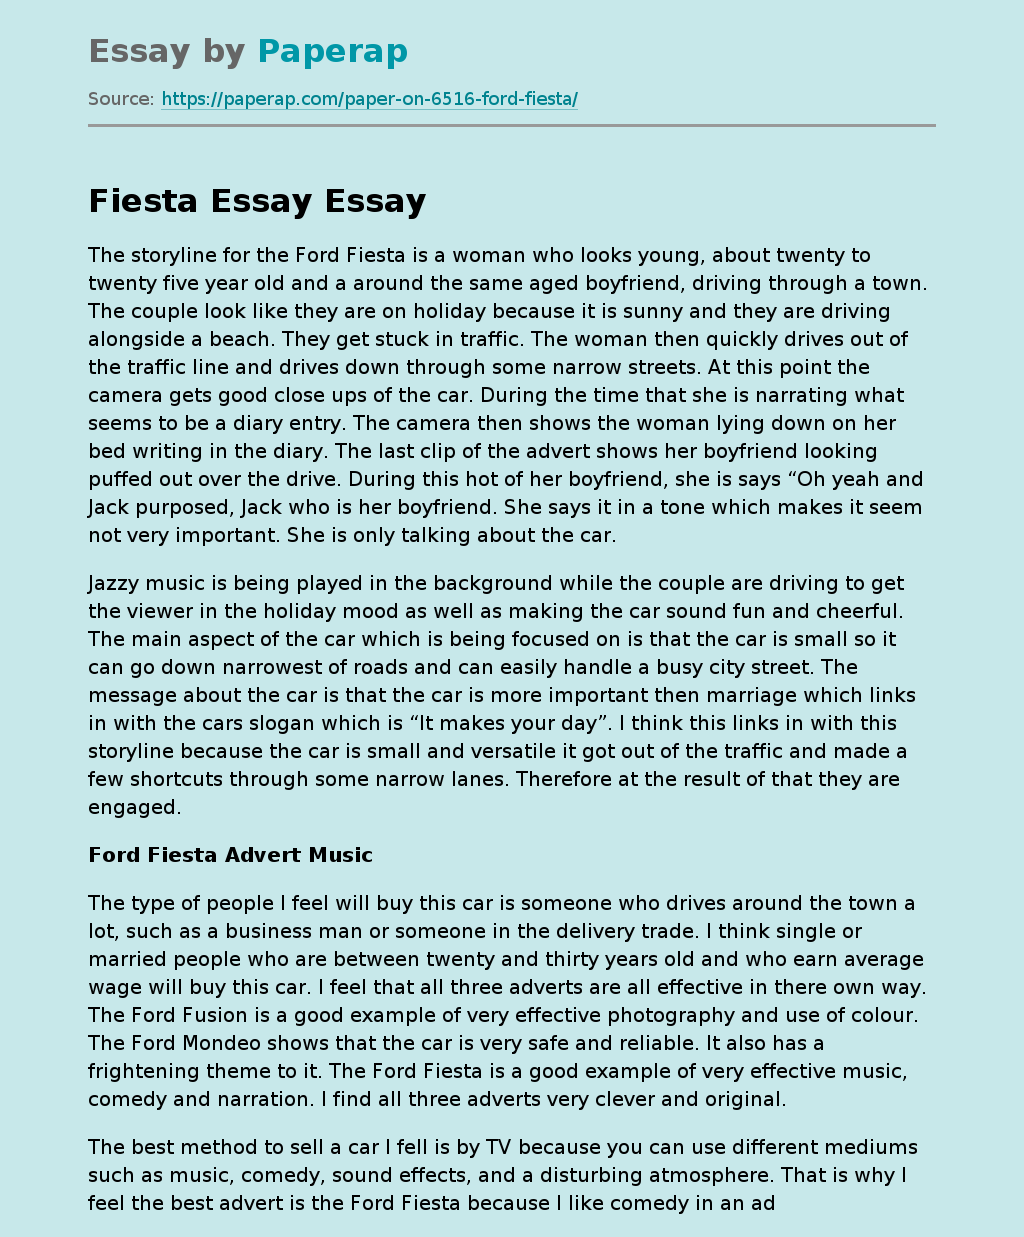 Fiesta Essay